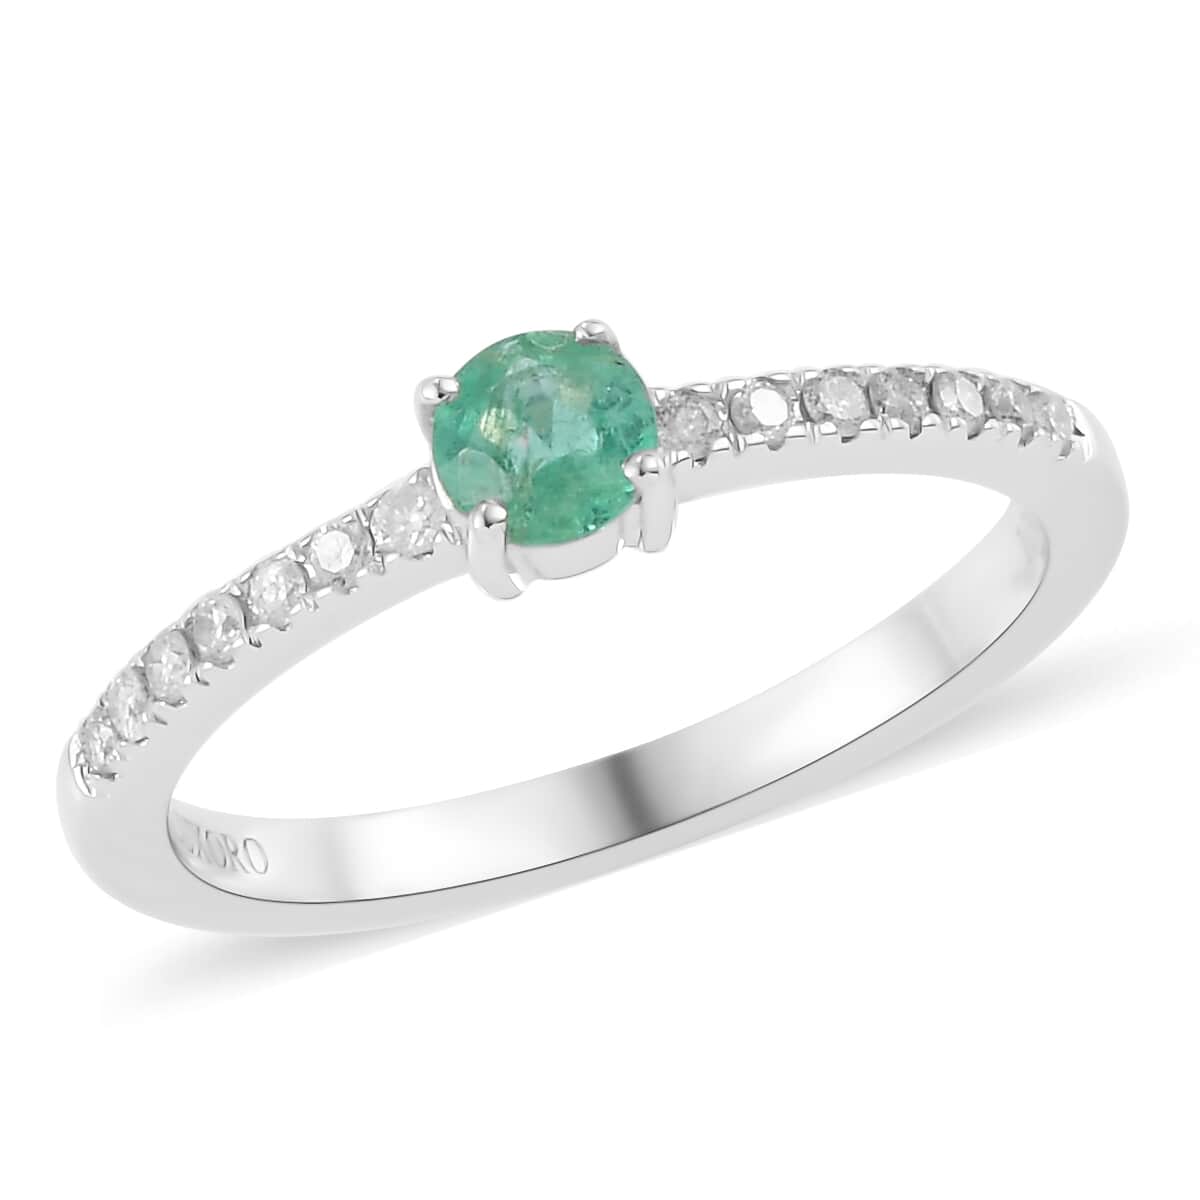 LUXORO 10K White Gold Premium Boyaca Colombian Emerald and Diamond Dainty Ring (Size 8.0) 0.35 ctw image number 0